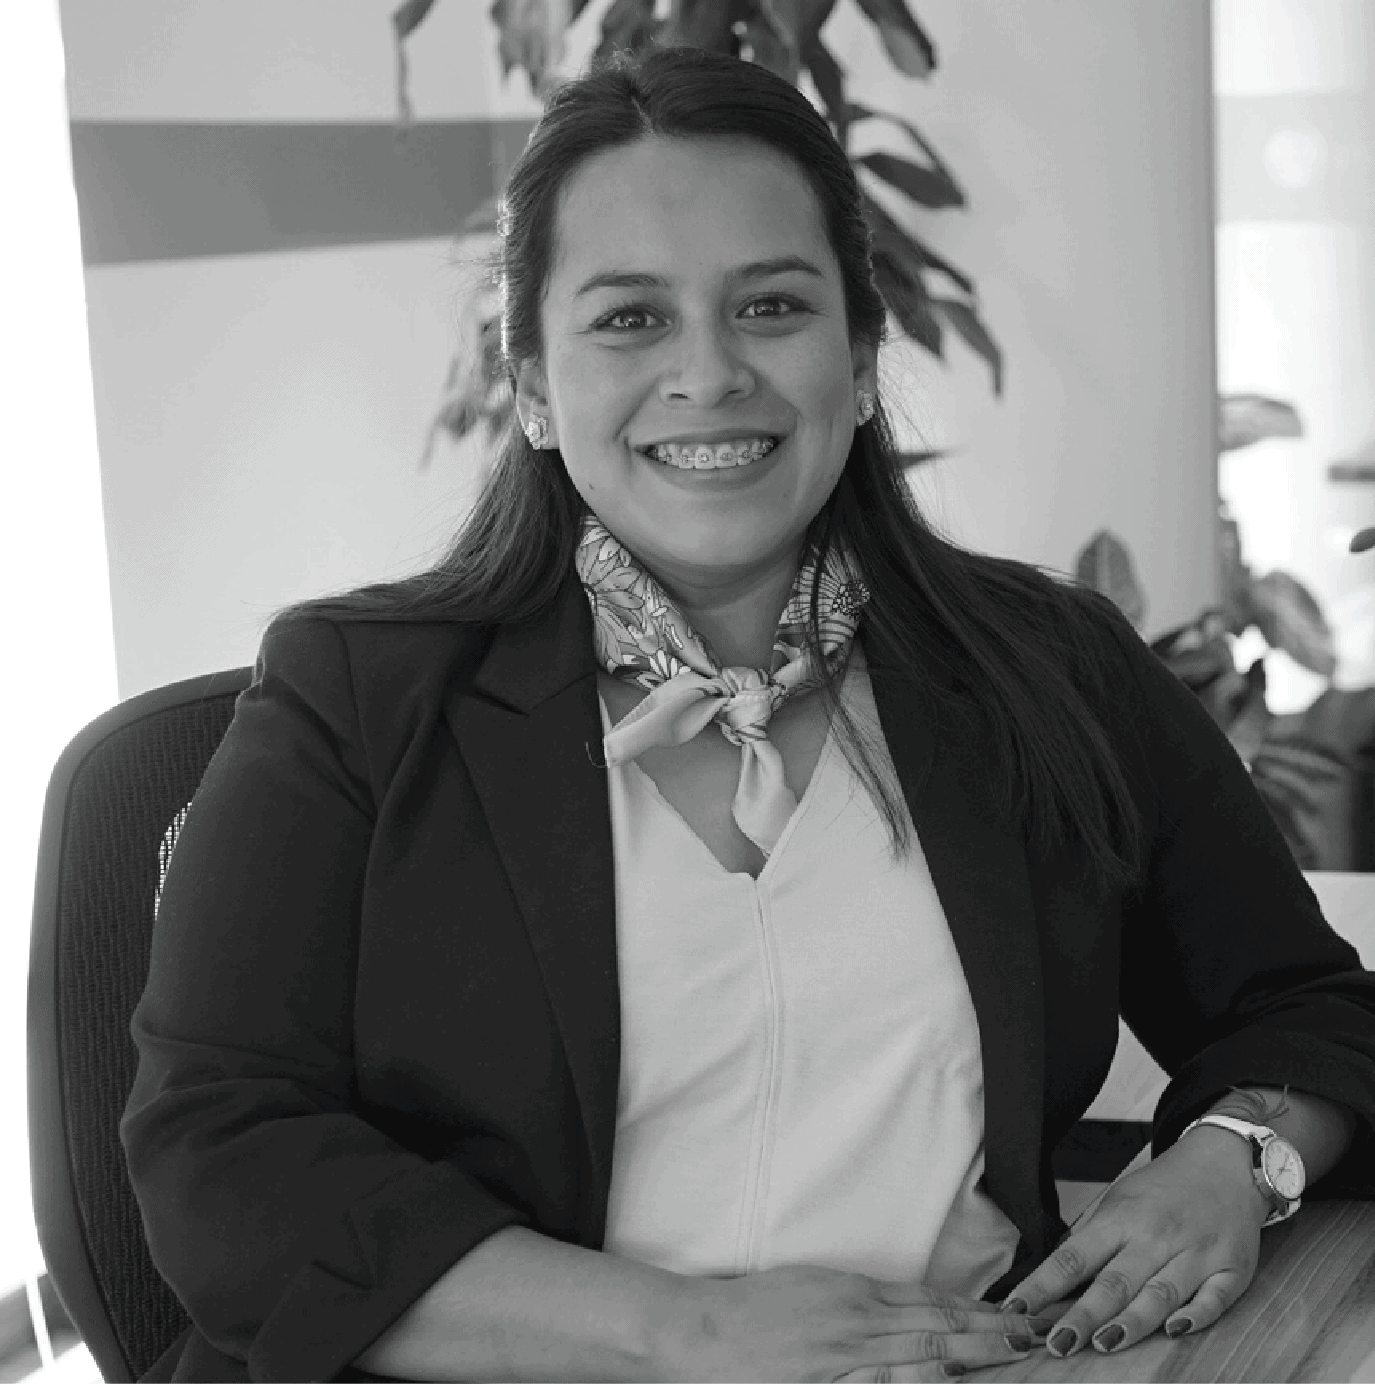 Adriana Alvarez